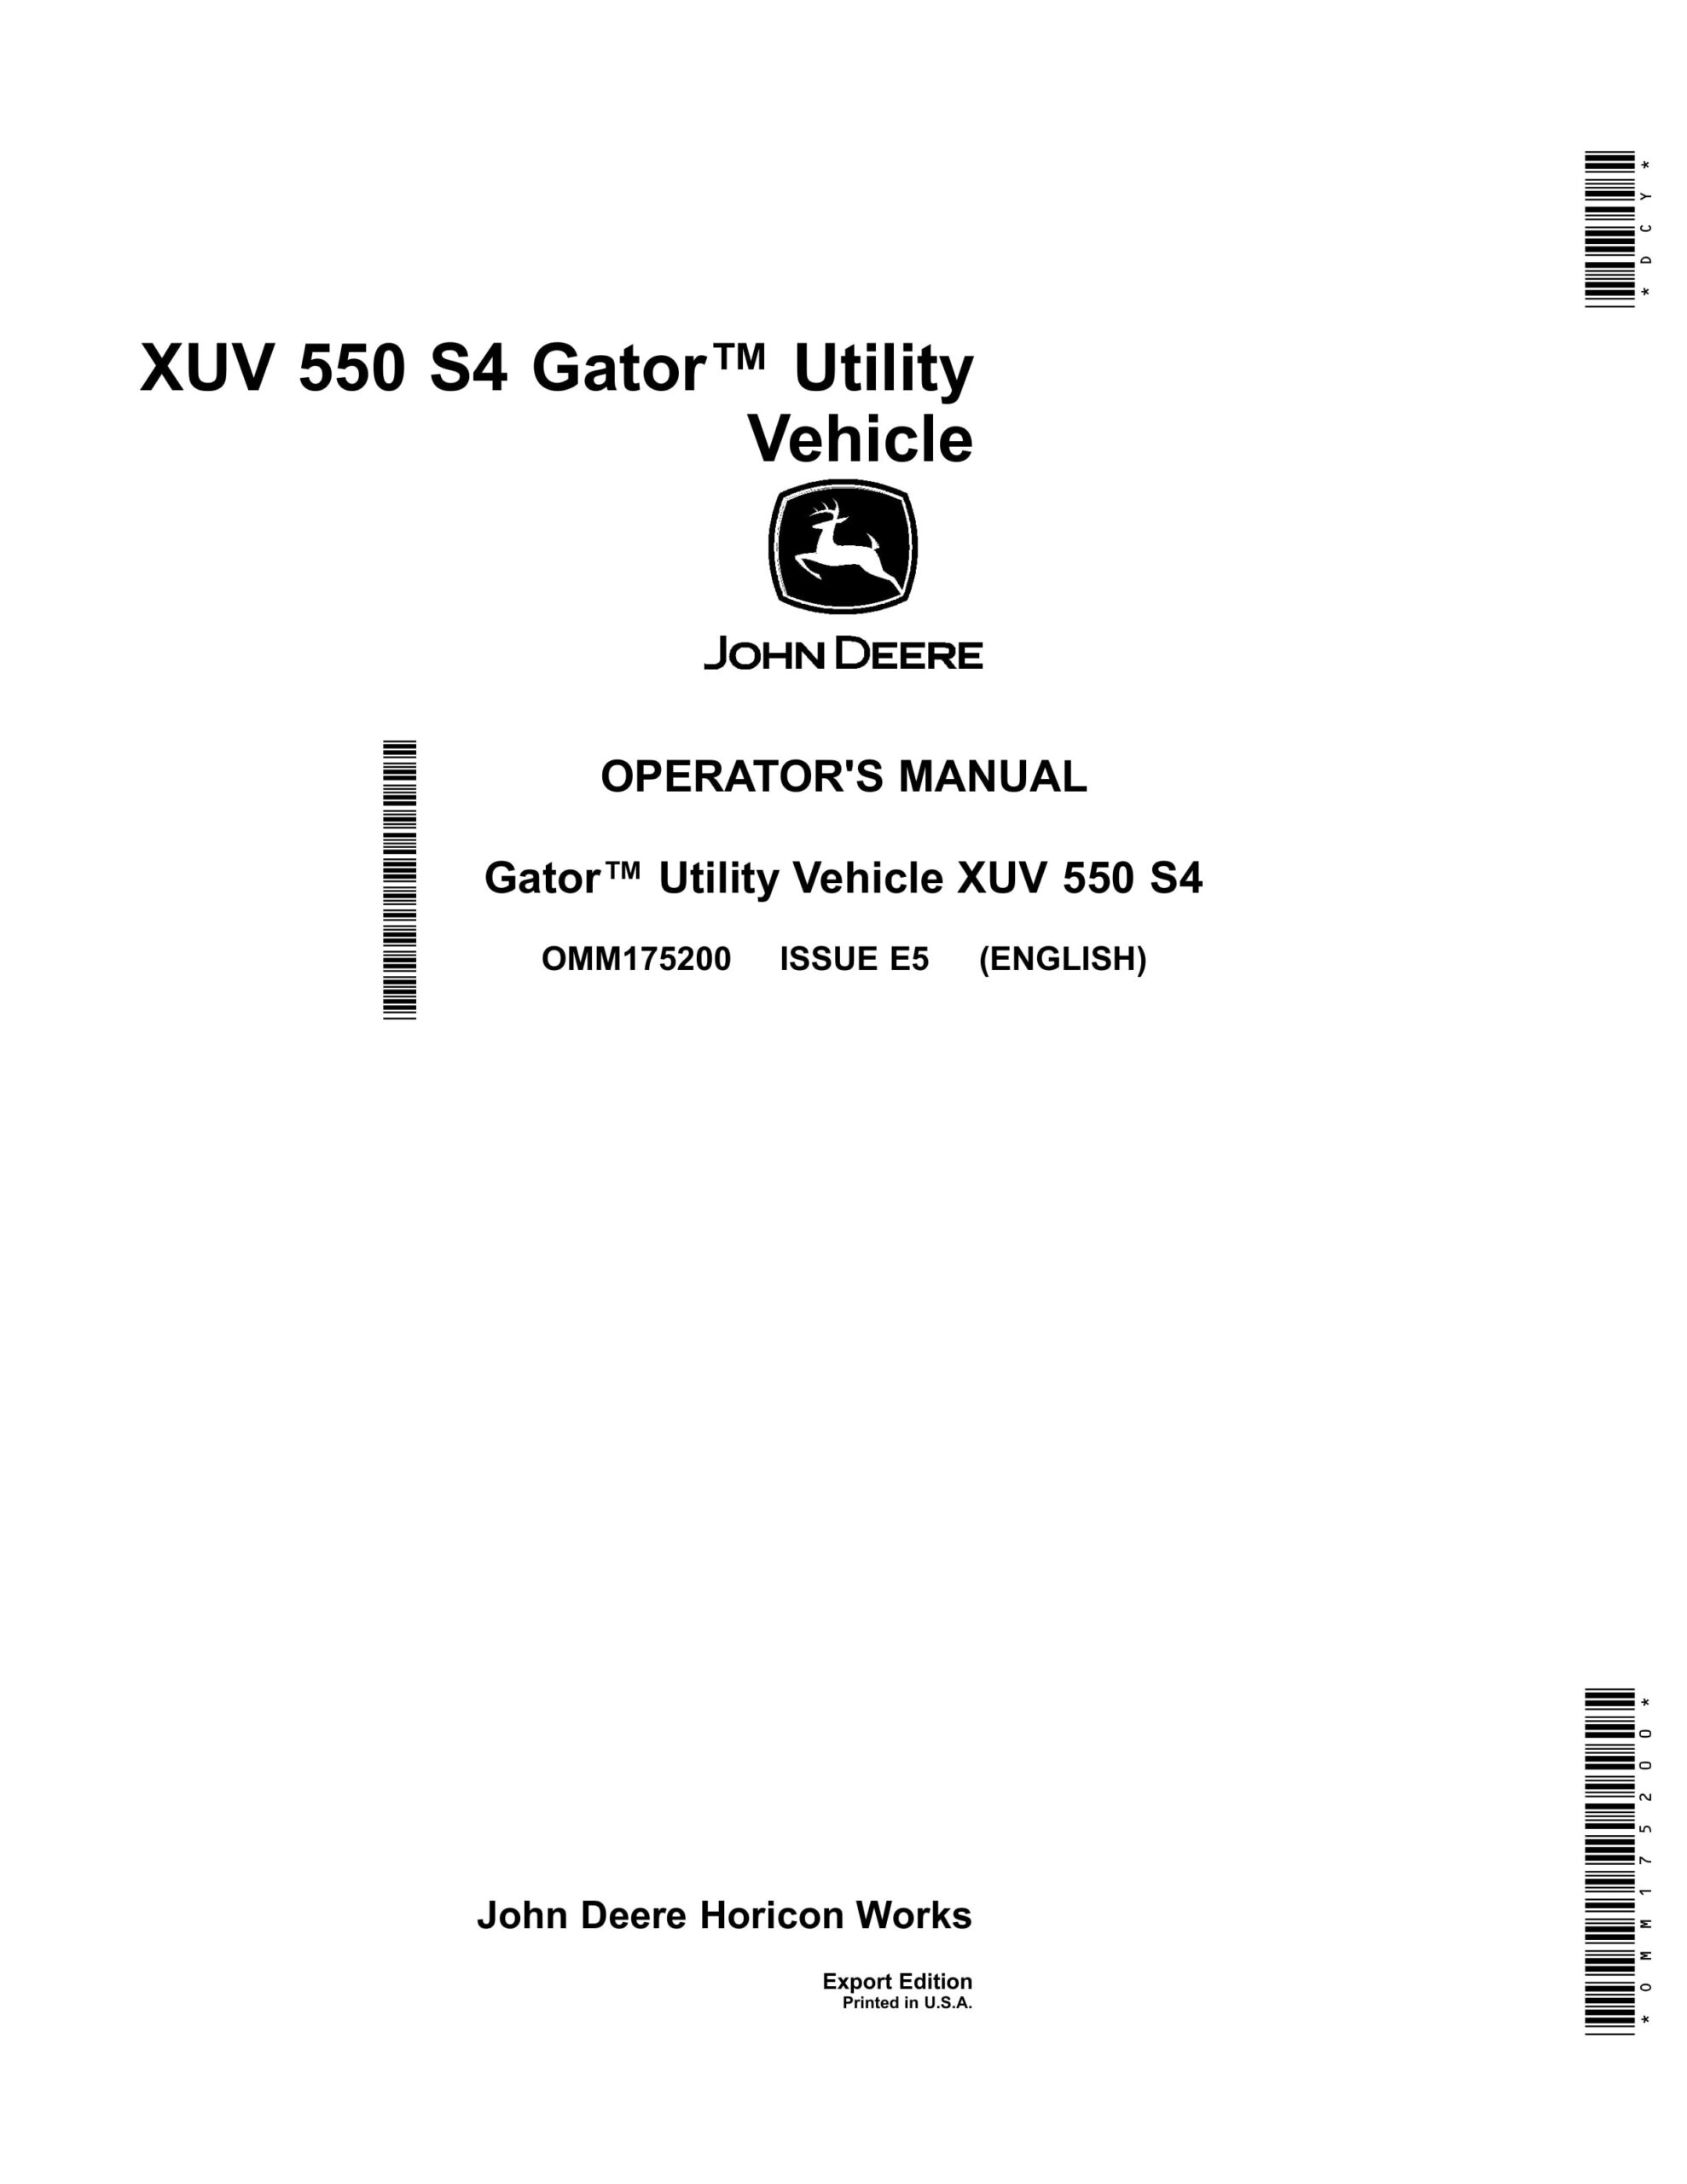 John Deere XUV 550 S4 Gator Utility Vehicles Operator Manual OMM175200-1